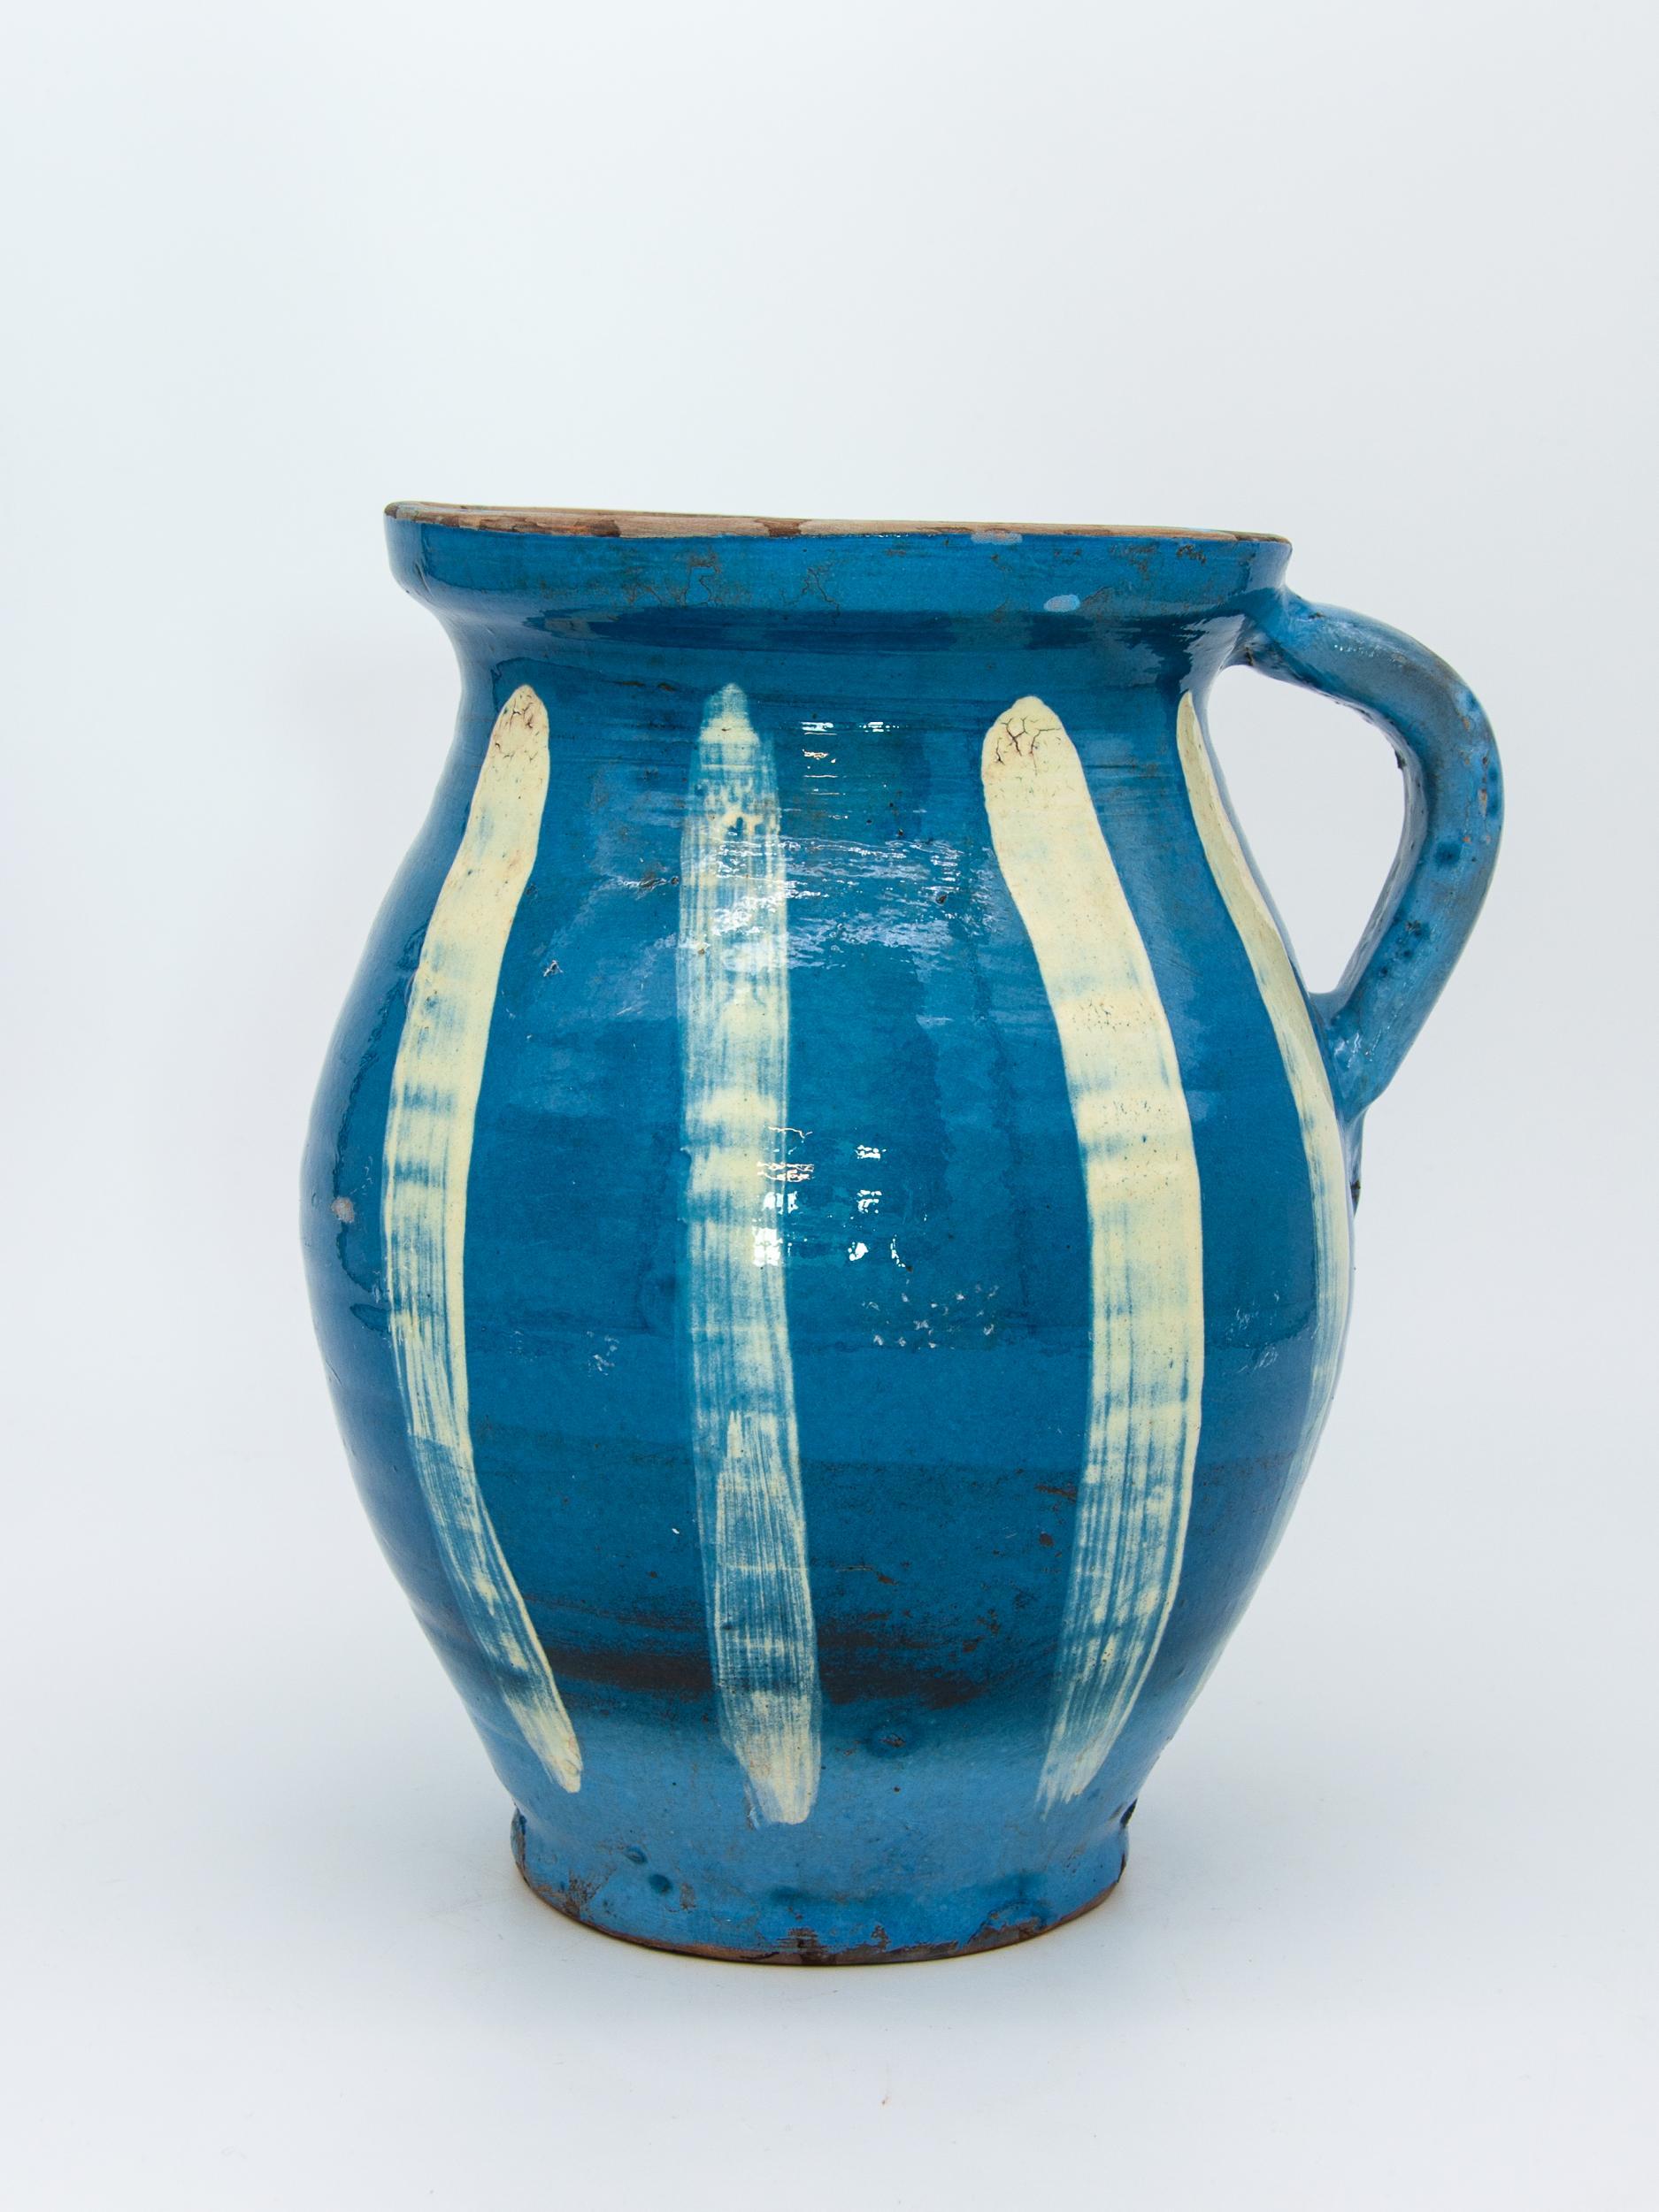 British Modern Blue and White Glazed Ceramic Pitcher